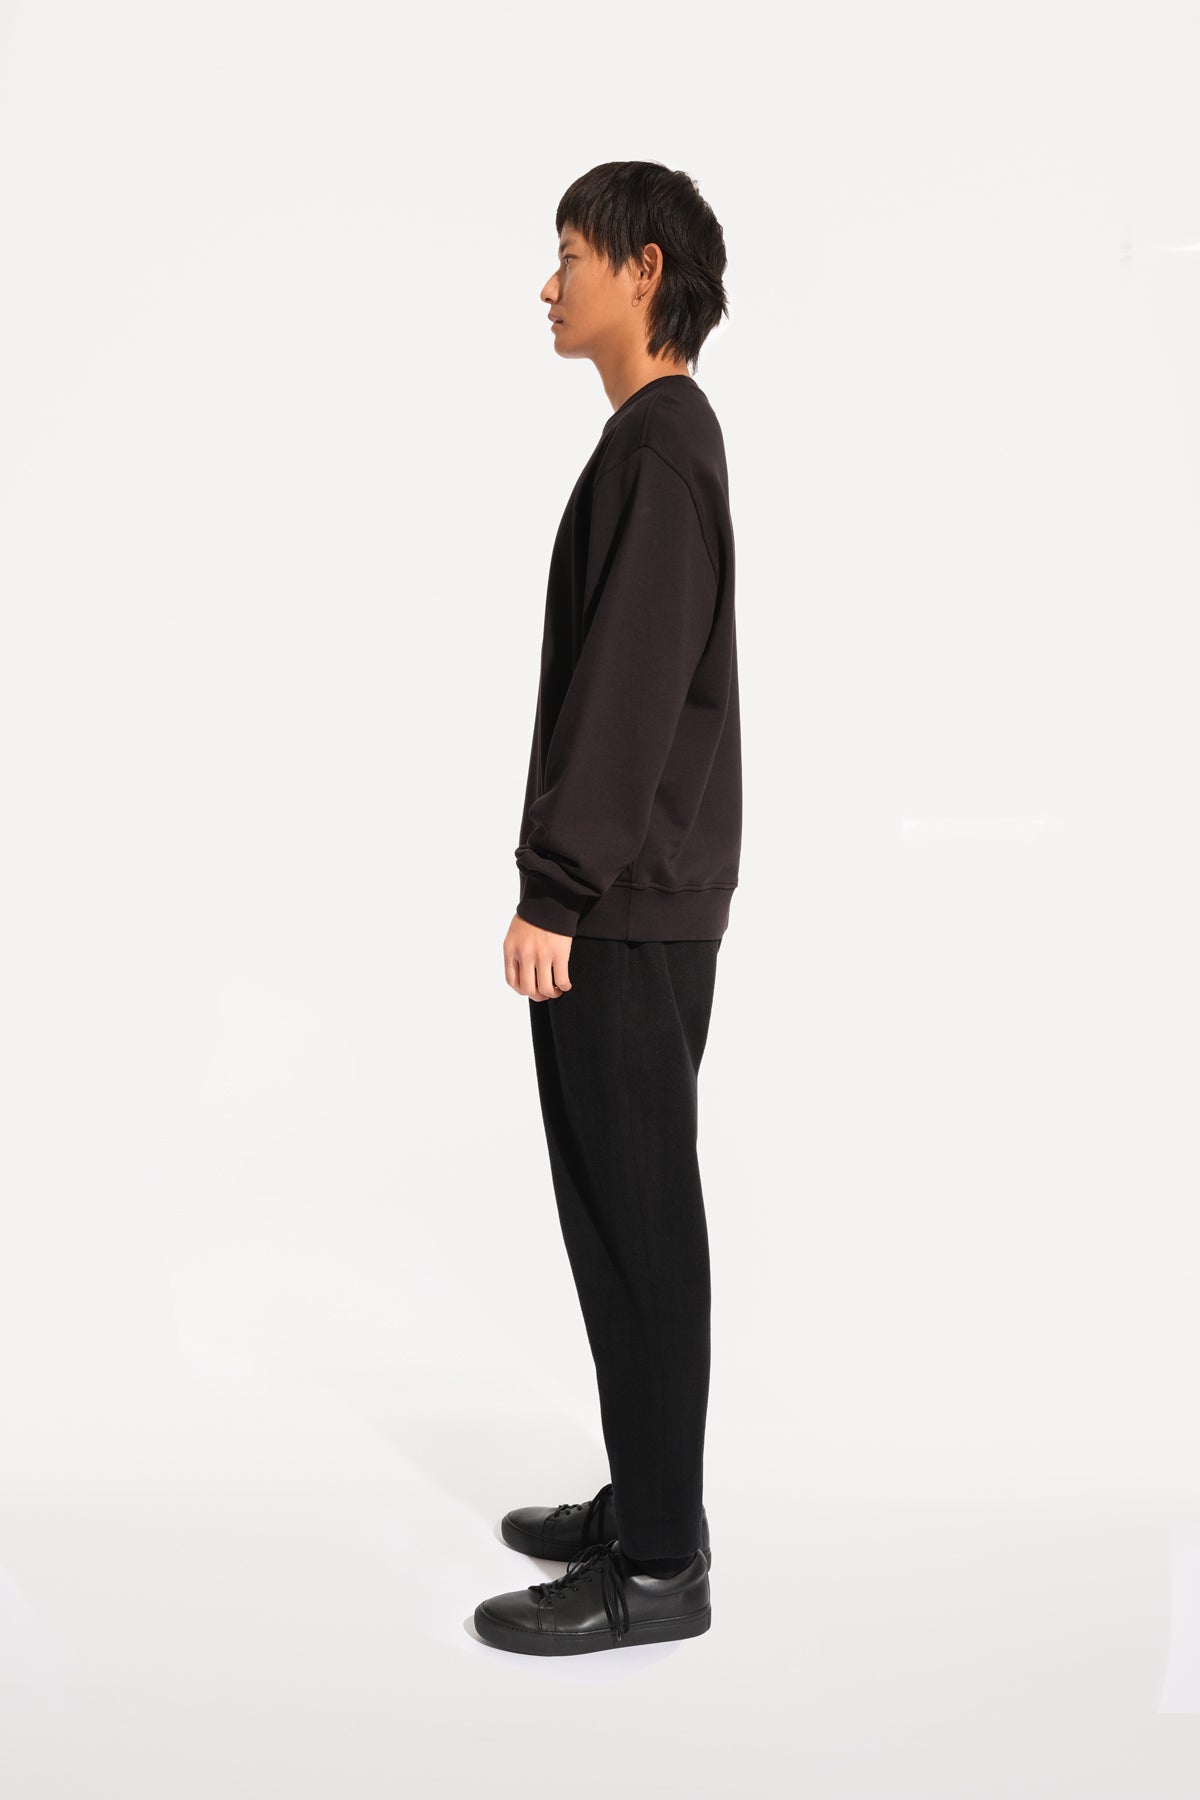 oftt - 02- reversible sweatshirt - black - organic cotton fleece - image 4